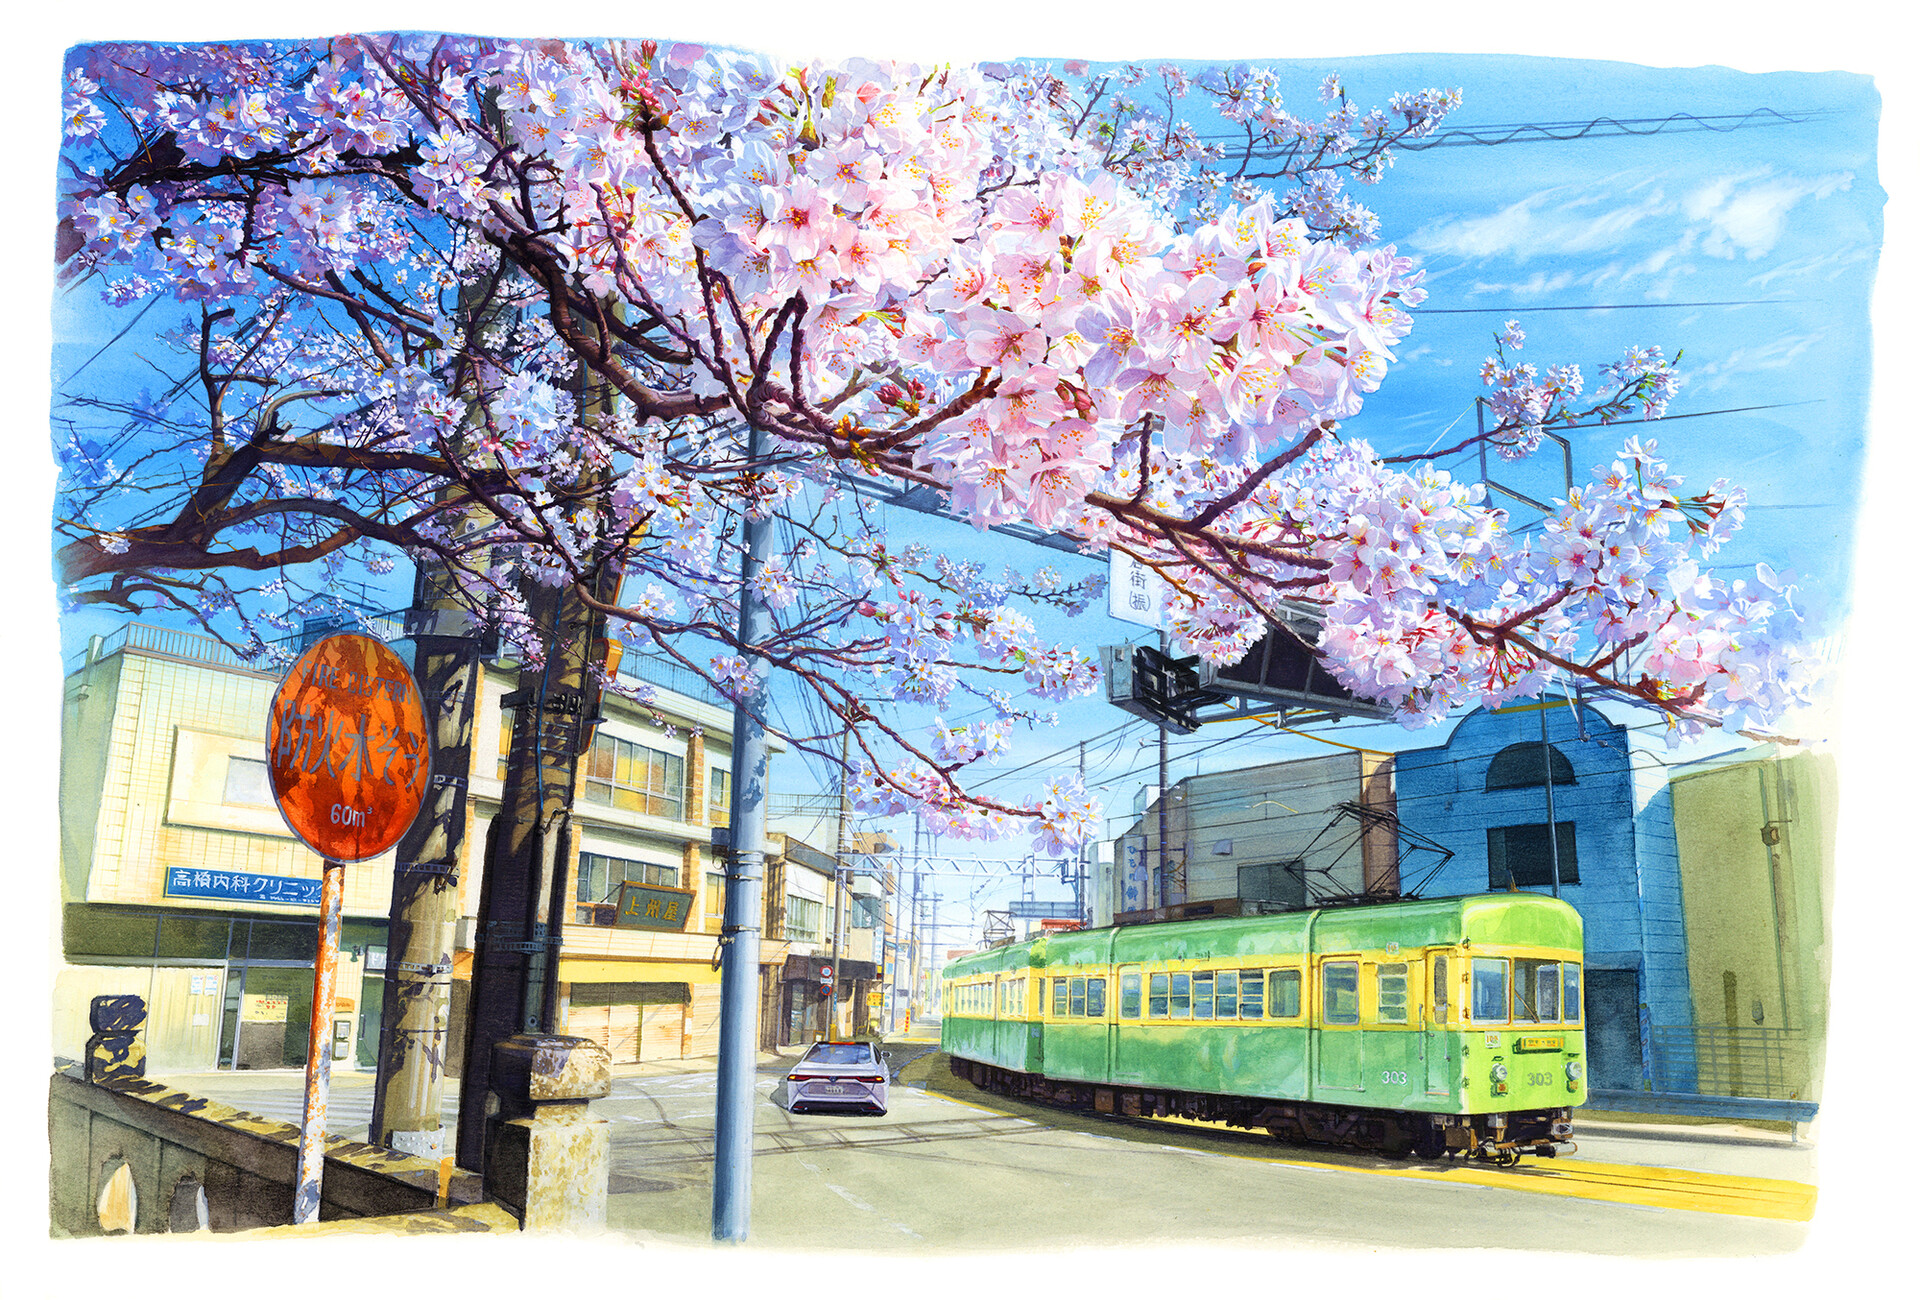 General 1920x1300 artwork digital art cityscape nature train trees cherry blossom